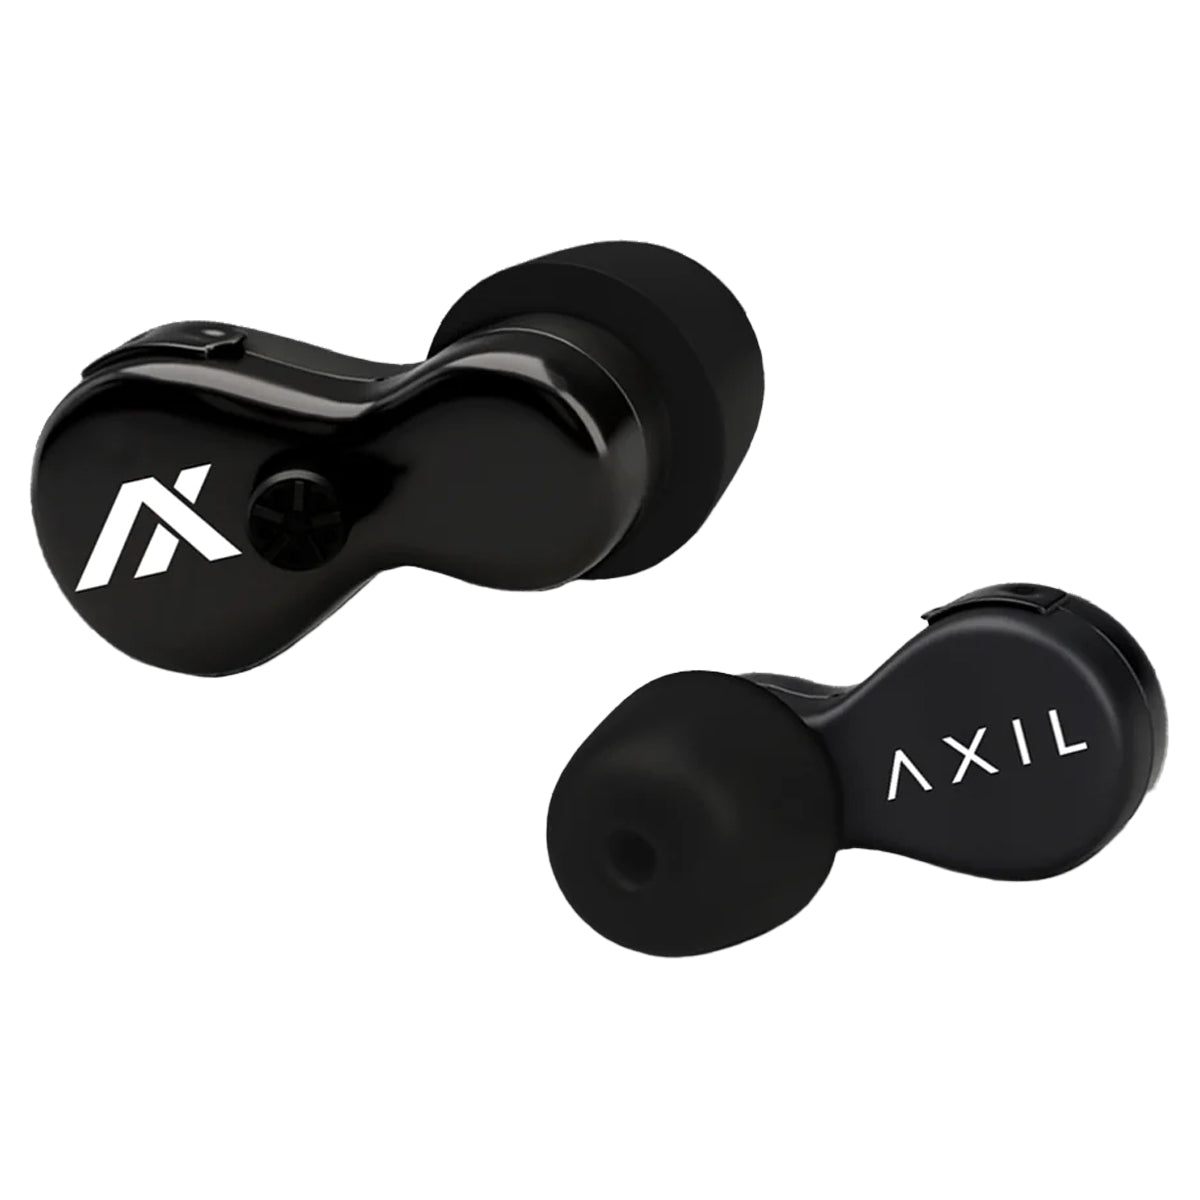 Axil GS Digital 2 Ear Buds